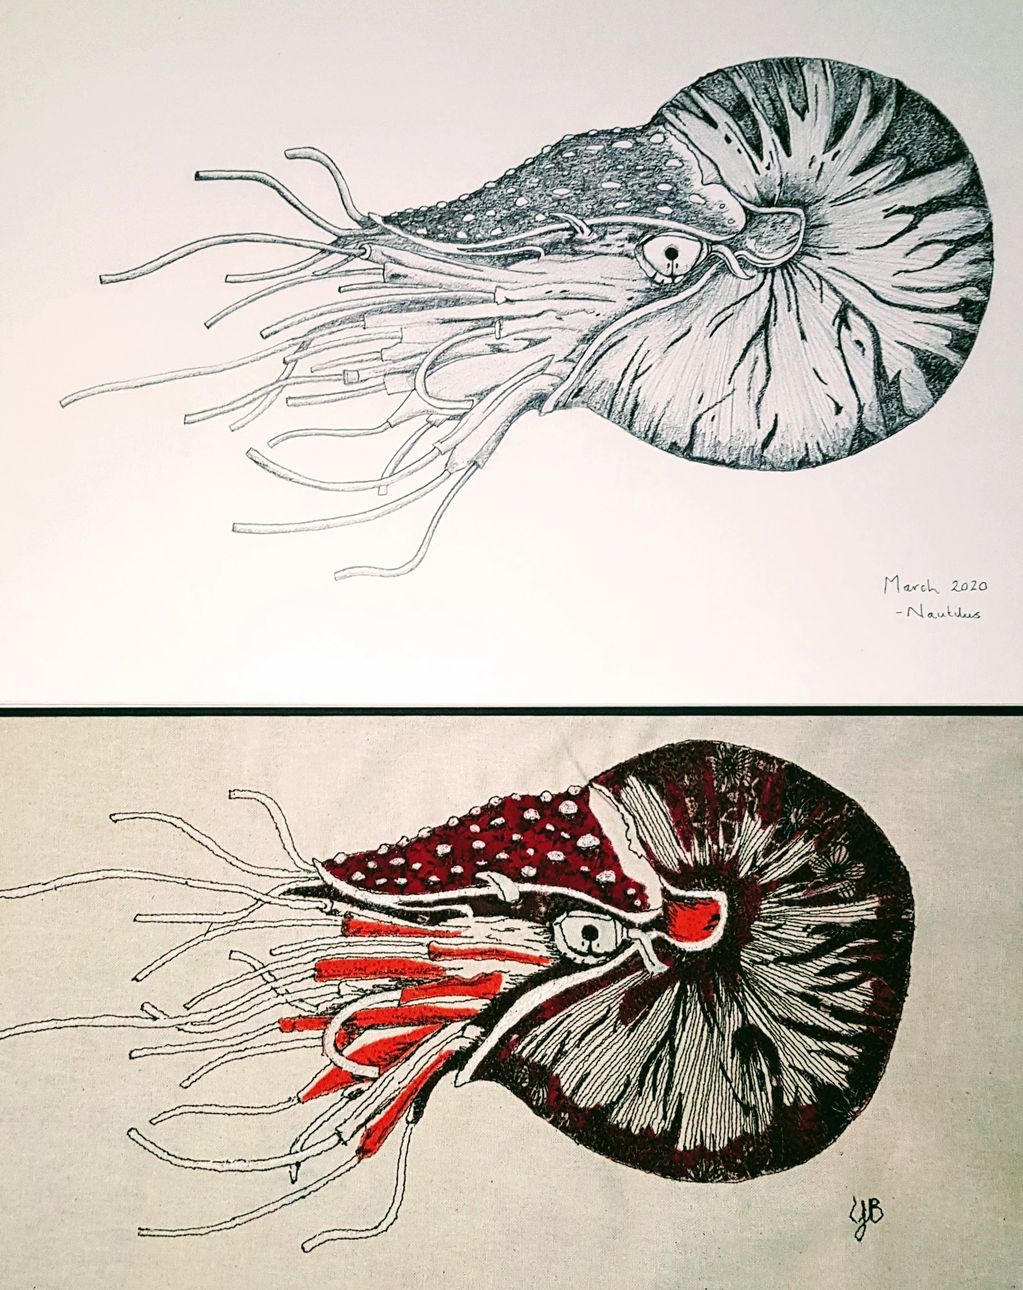 Nautilus sketch and textile